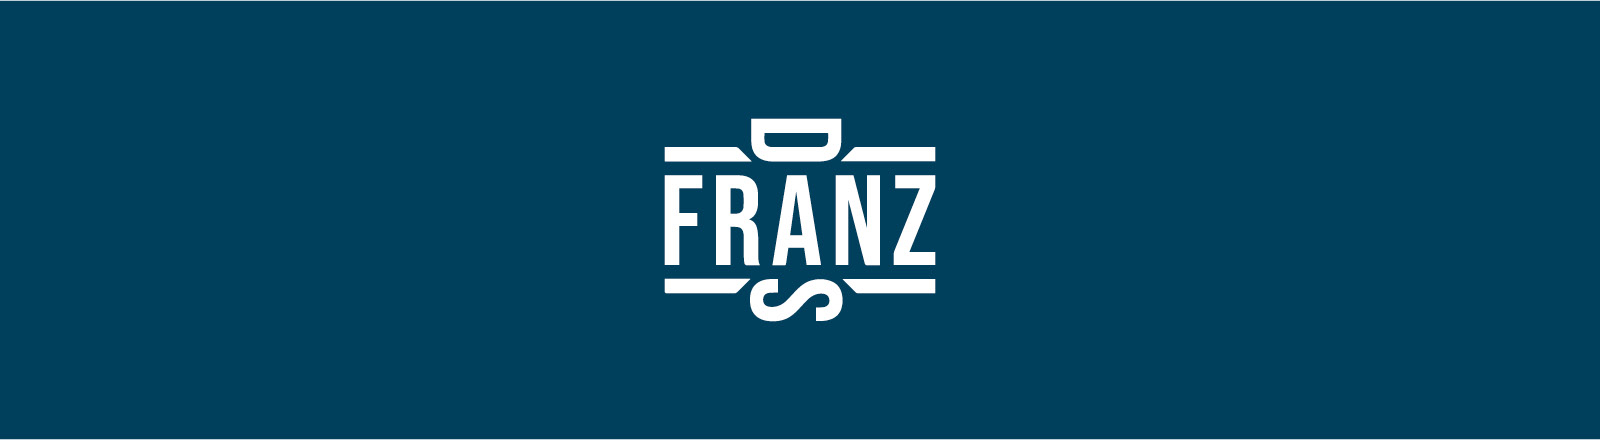 Franz's logo on a blue background.